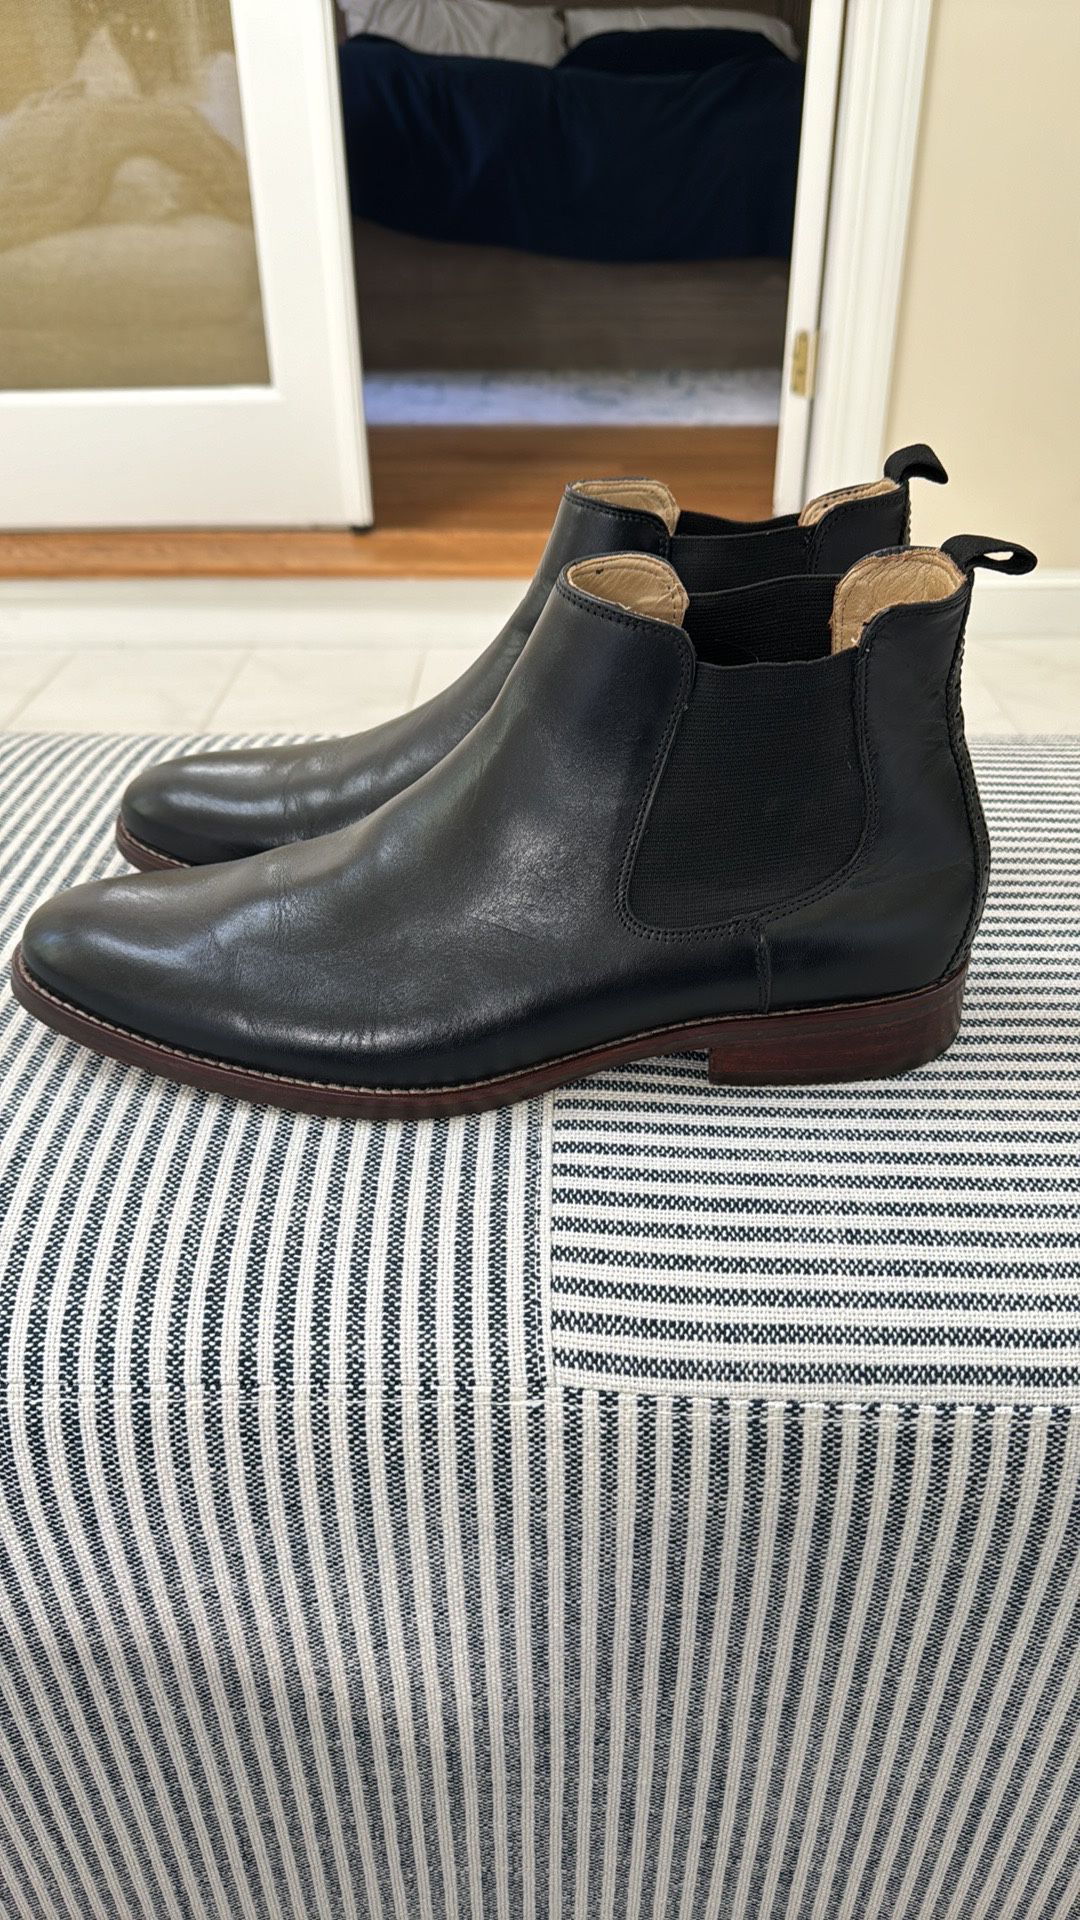 Men’s Black Leather Chukka Boot Size 12